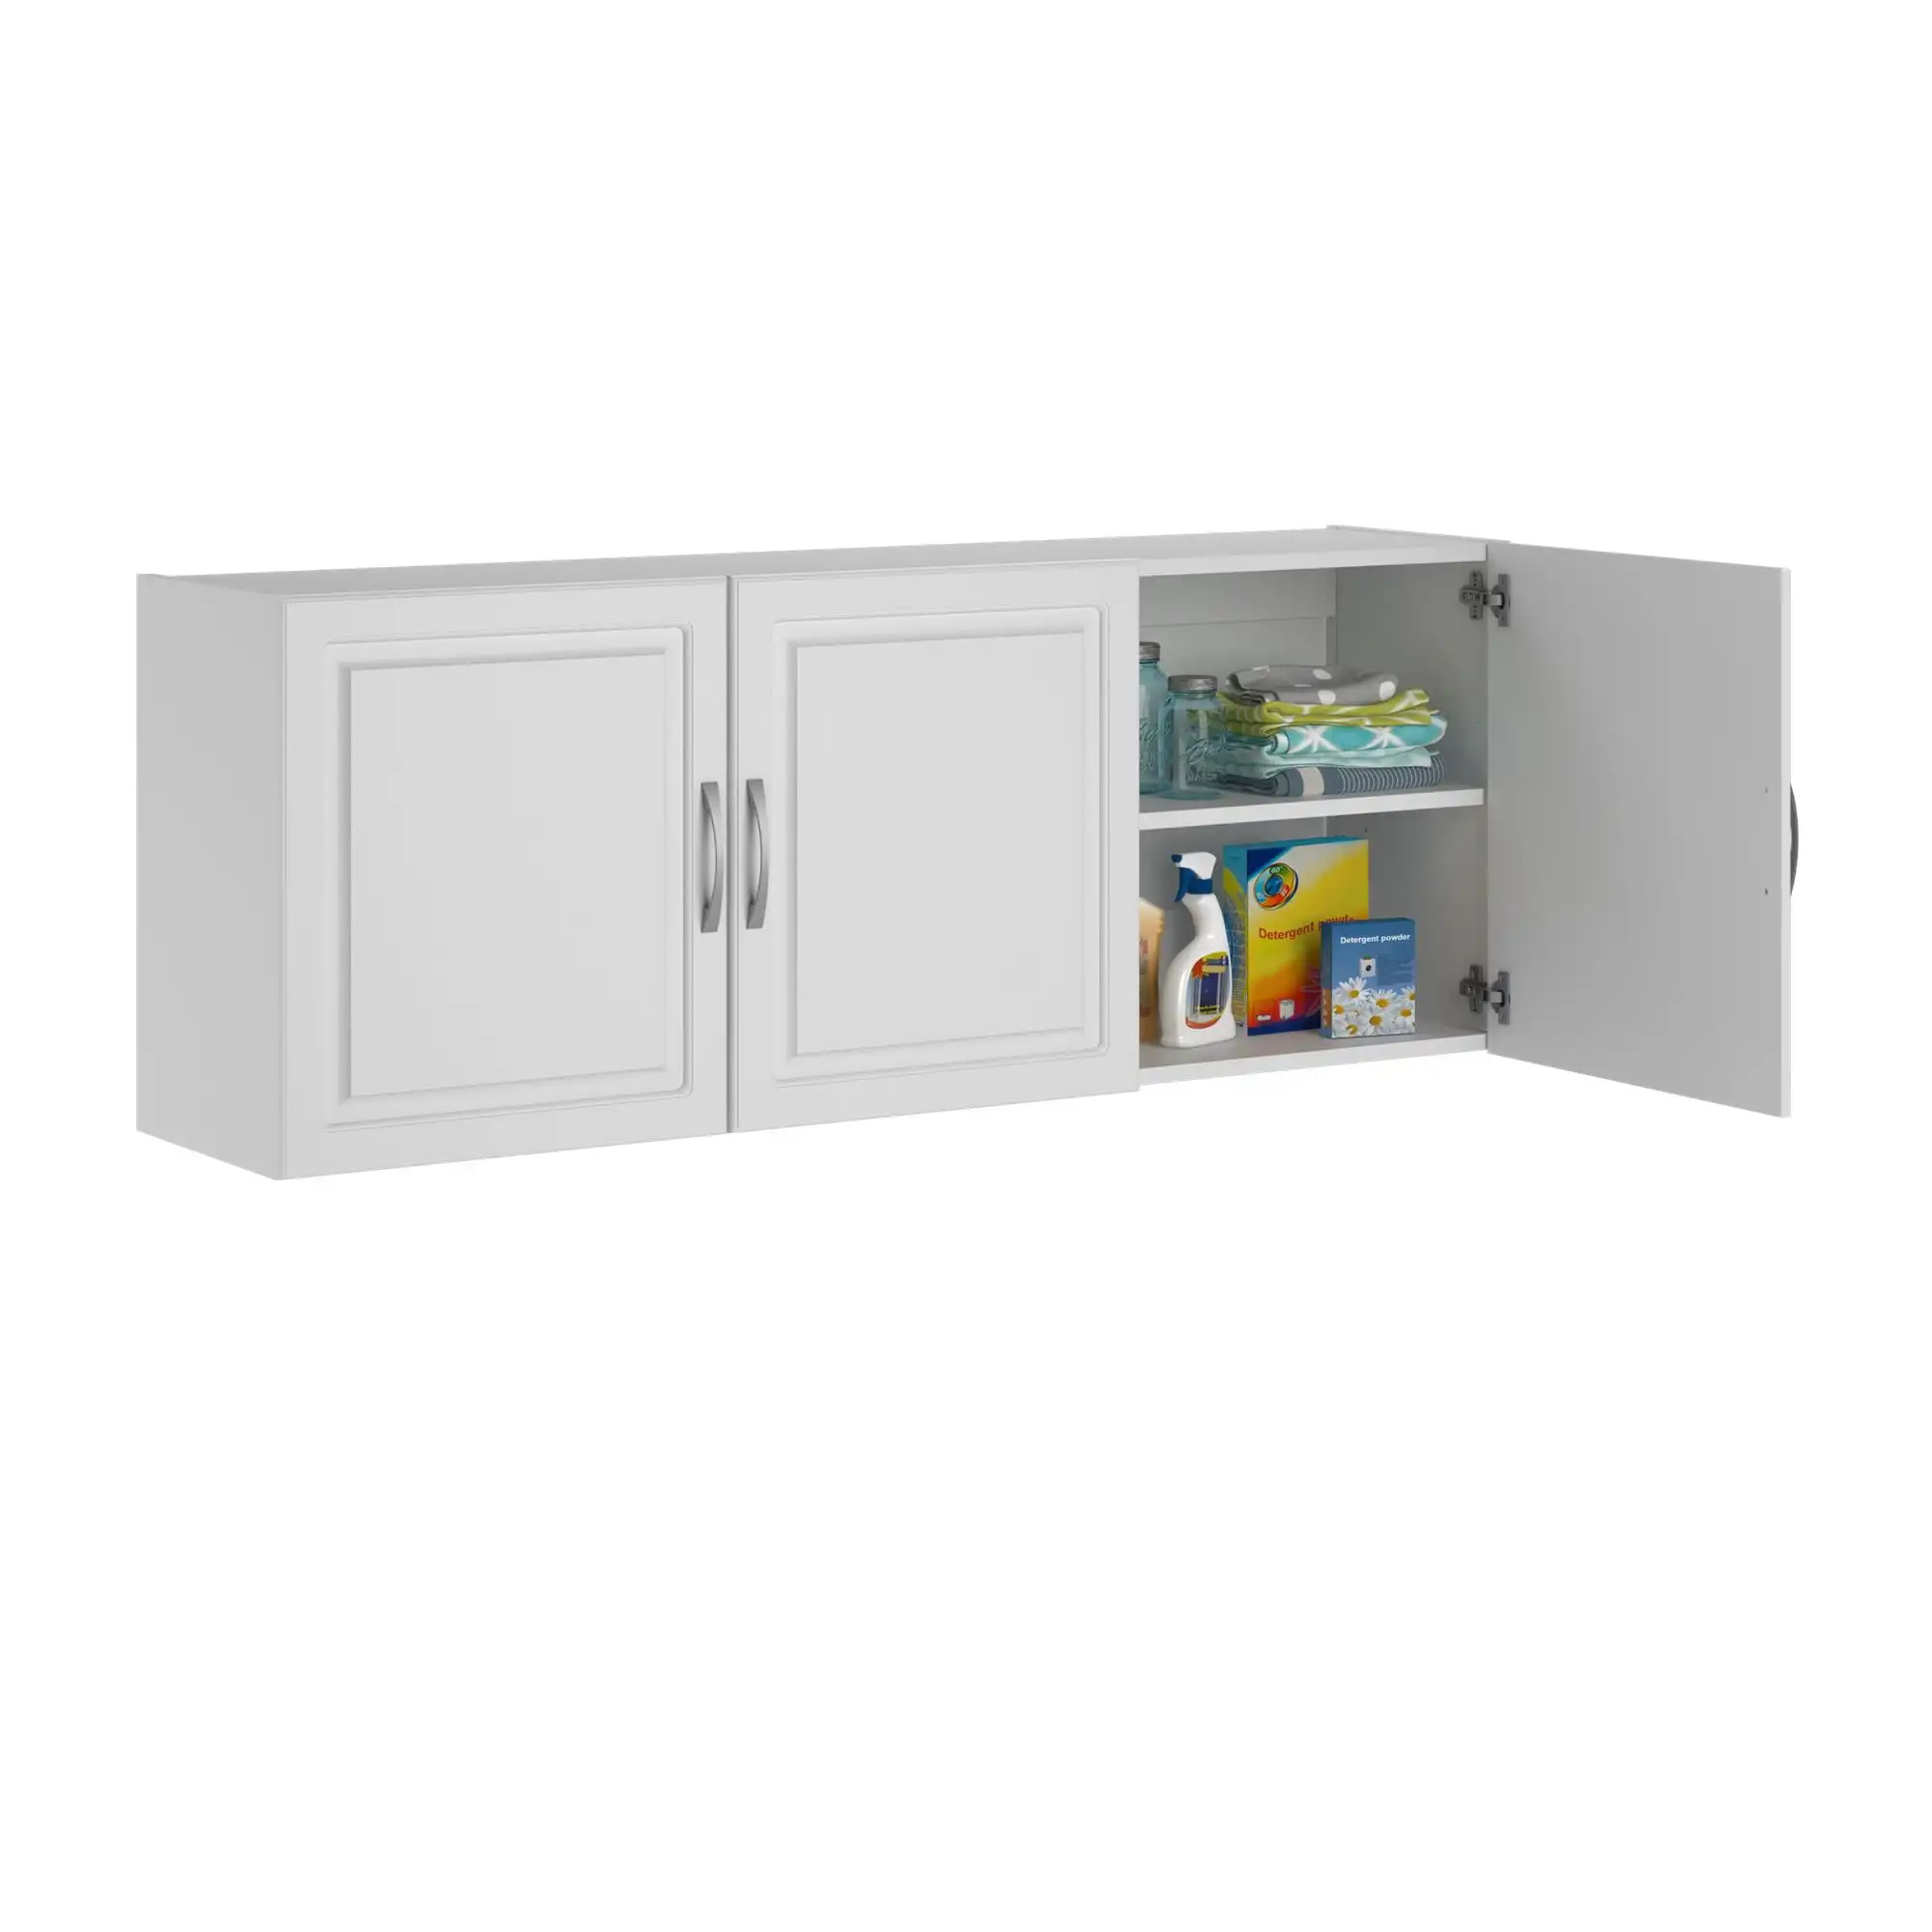 

Systembuild Evolution Kendall 54" Garage Storage Wall Cabinet, White